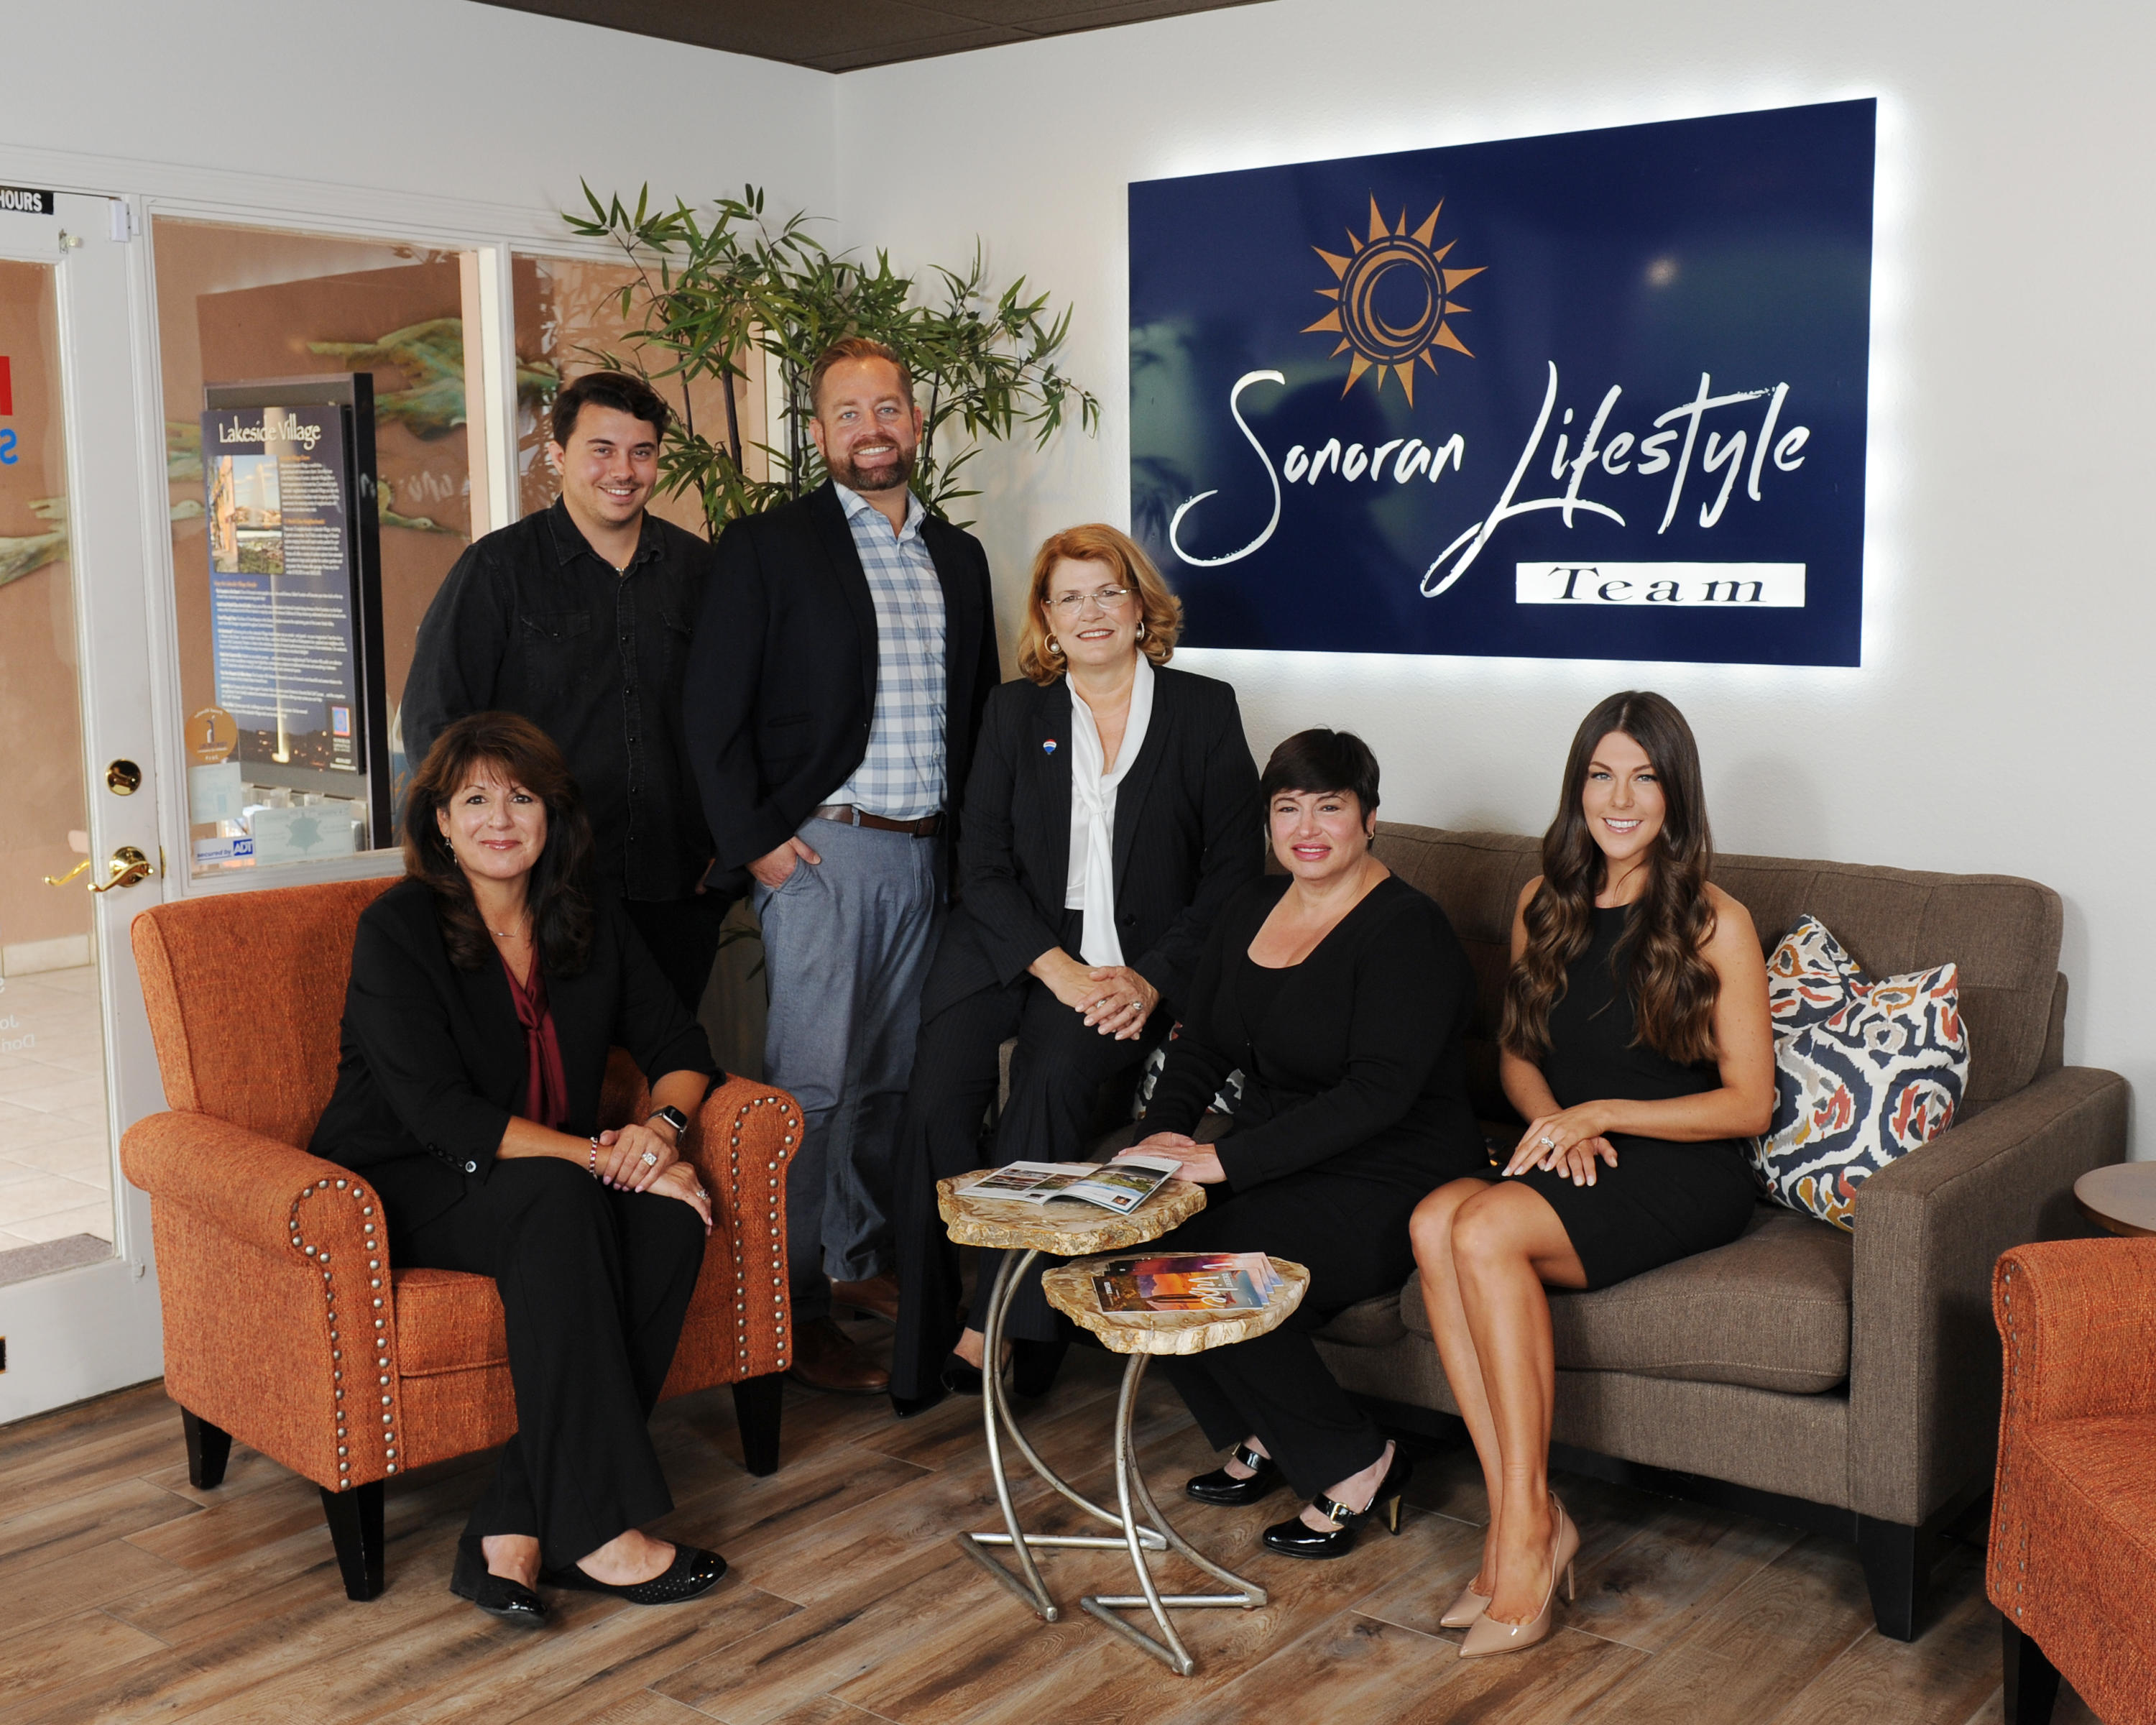 Sonoran  Lifestyle Team at RE/MAX Sum Properties